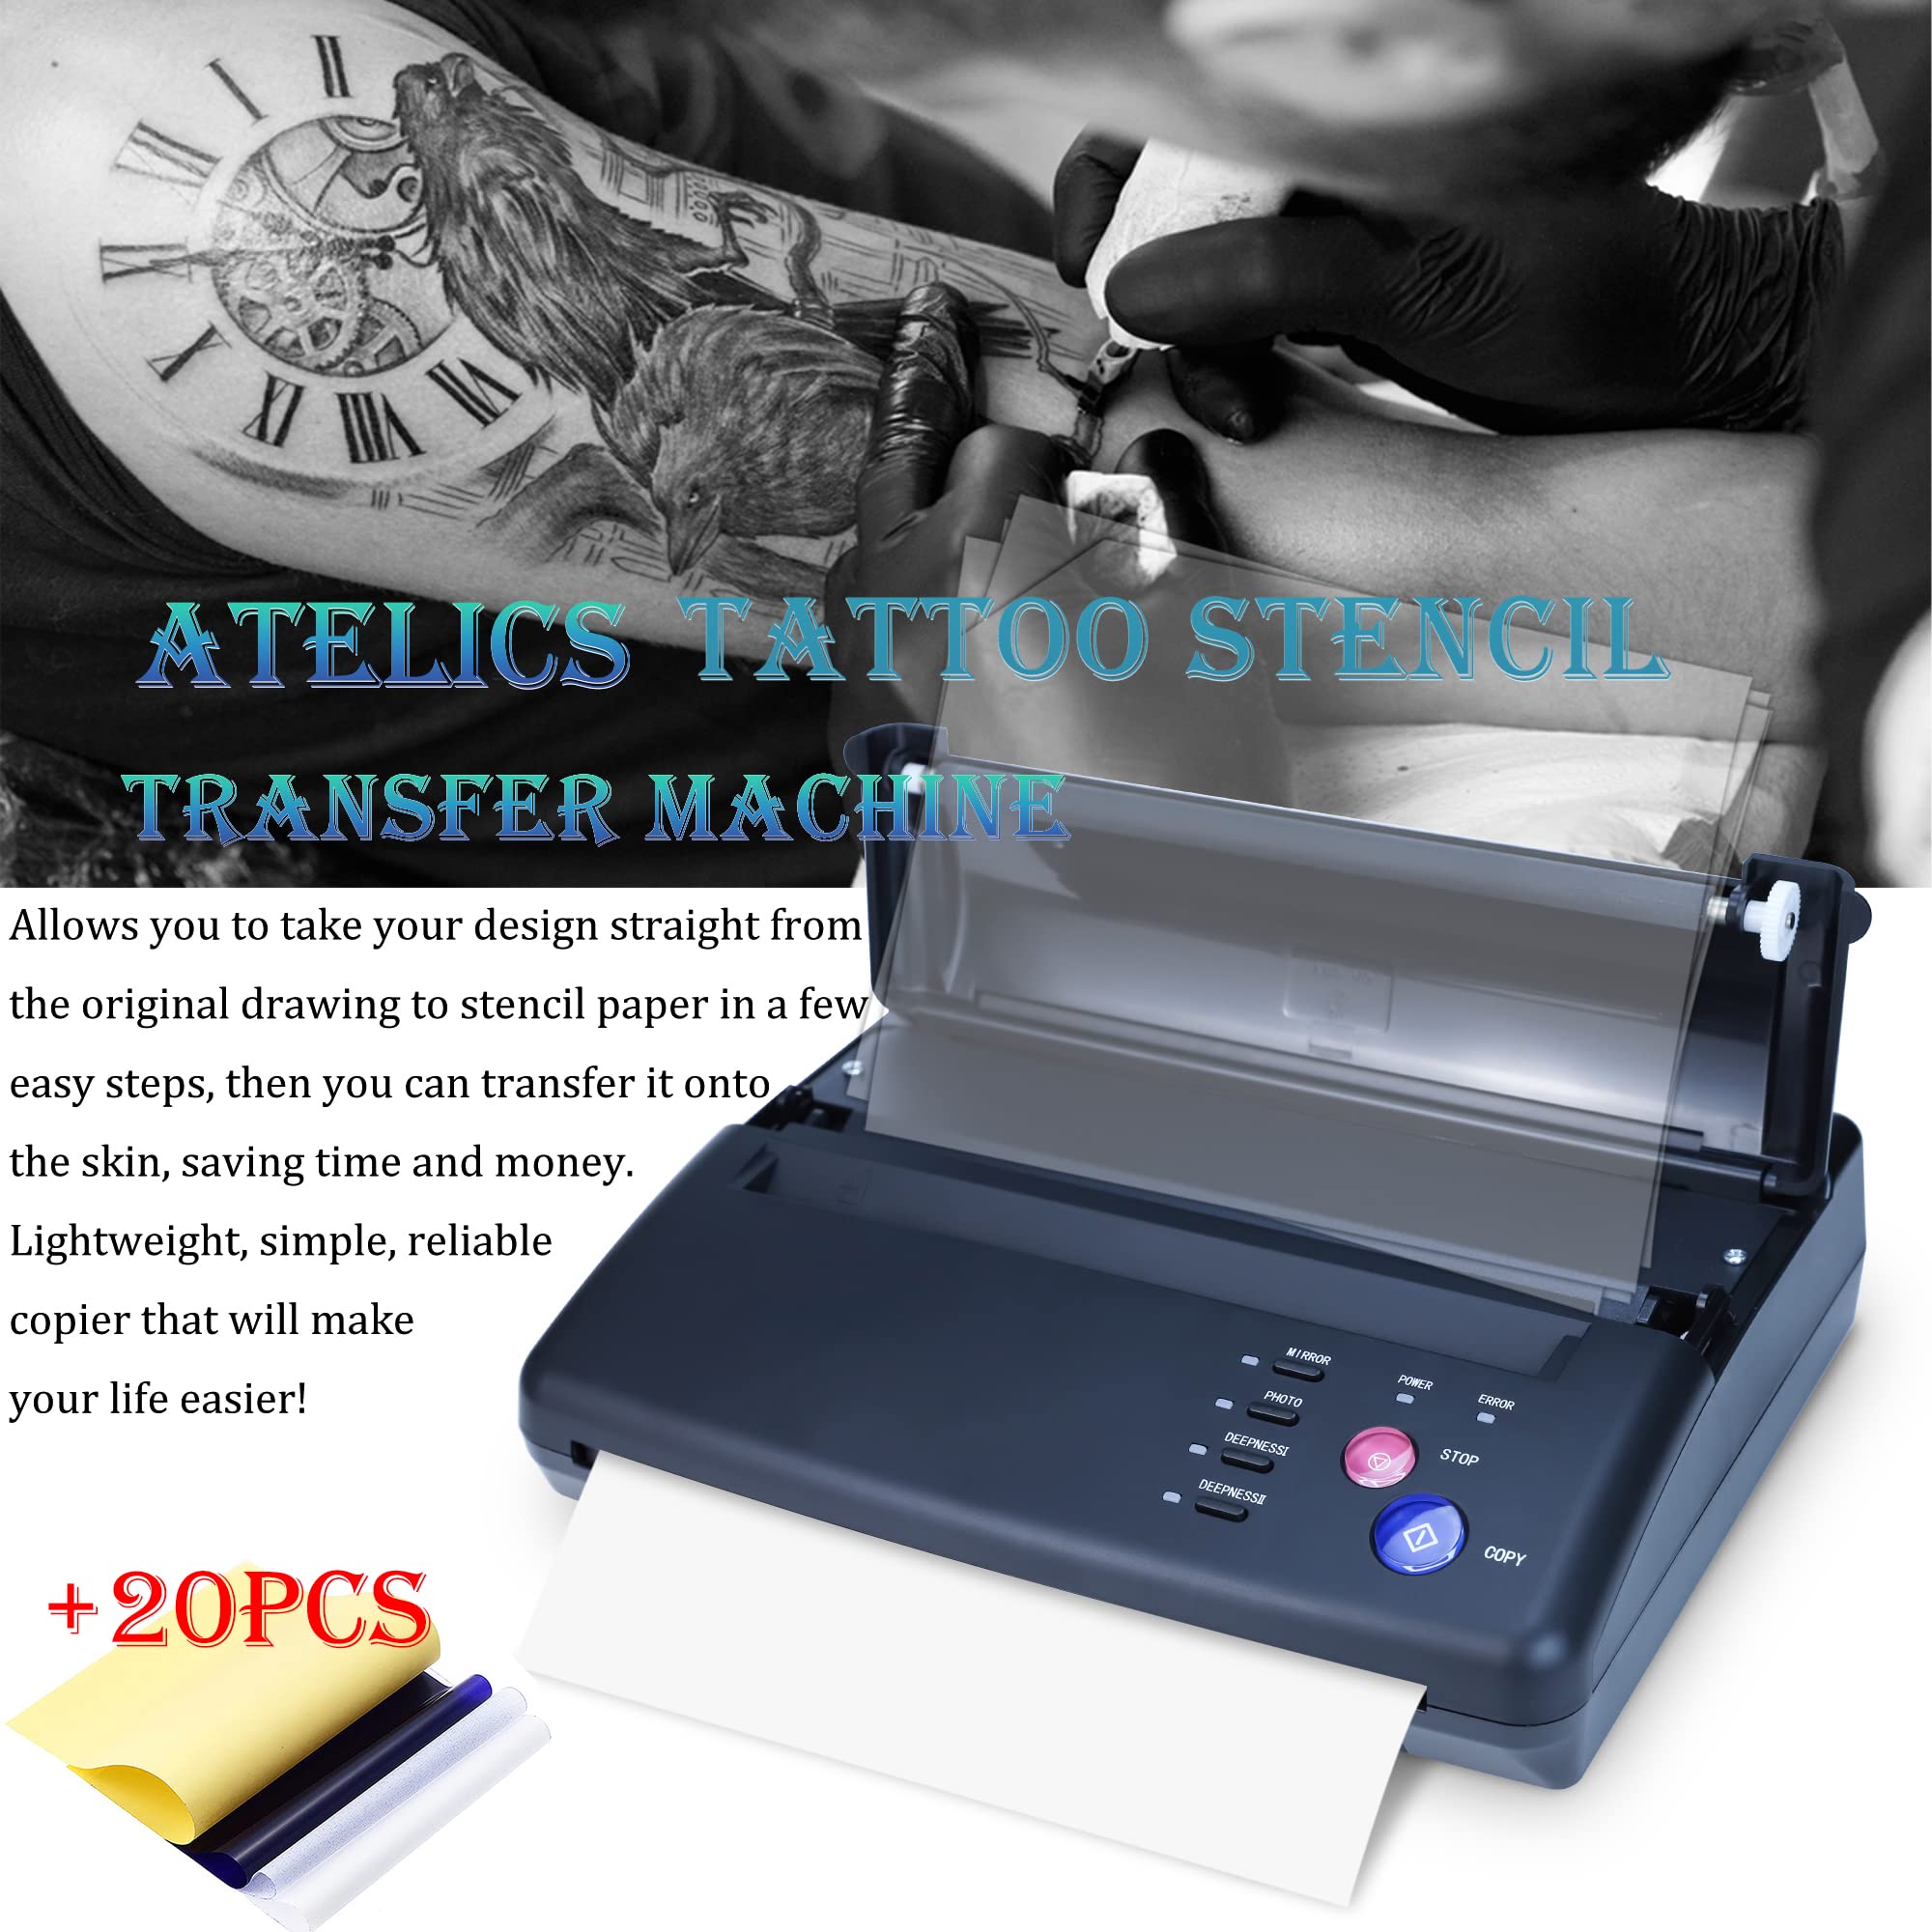 Atelics Tattoo Transfer Stencil Machine Thermal Copier Printer, with 20 Pcs Transfer Paper, Tattoo Stencil Printer Tattoo for Temporary and Permanent Tattoos, Black Update Version